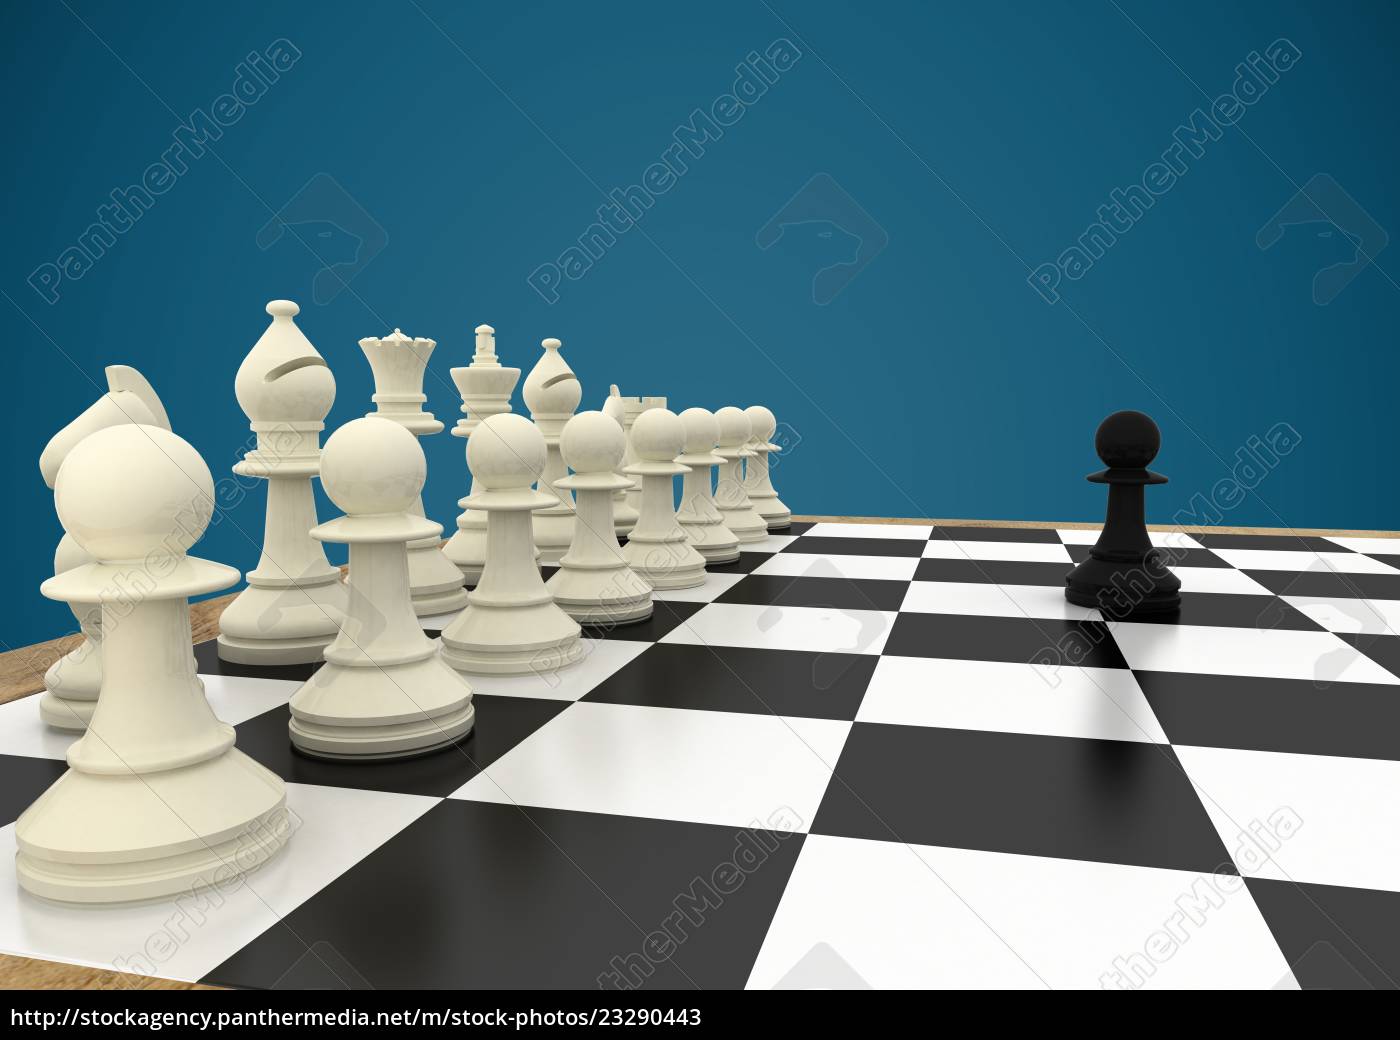 Linha de xadrez branco antes do jogo no tabuleiro preto e branco no escuro.  vinhetas.